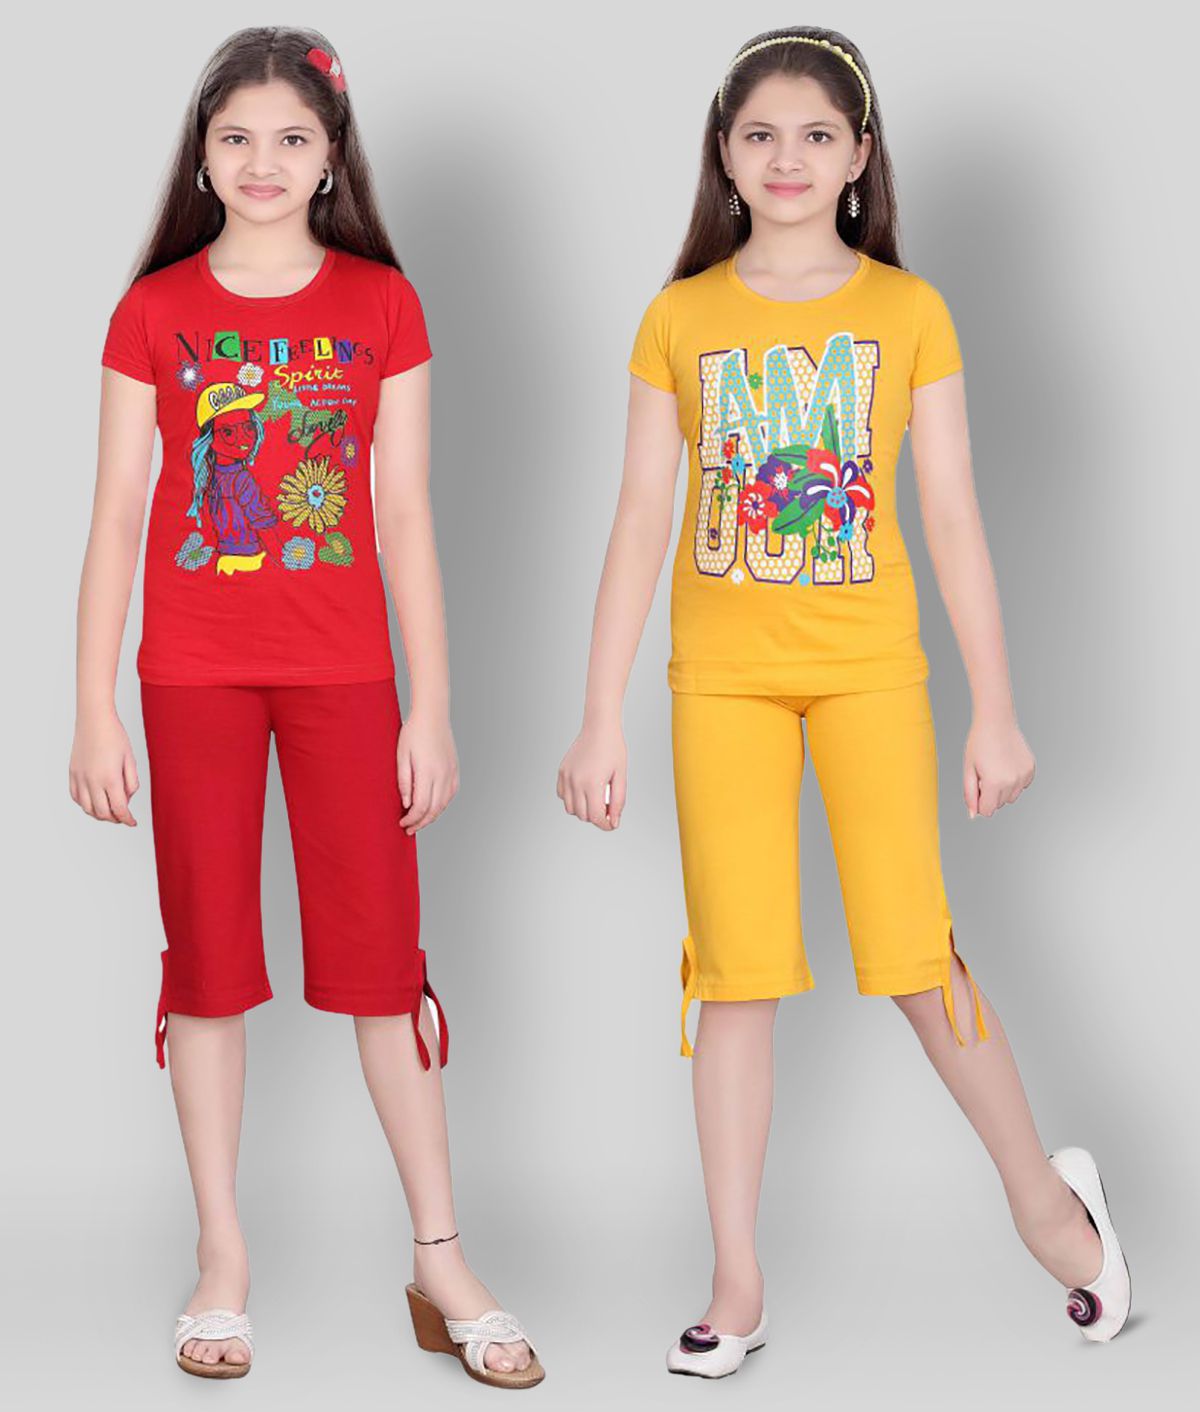     			Sini Mini Girl's Top bottom set Red & Yellow (Pack of 2)